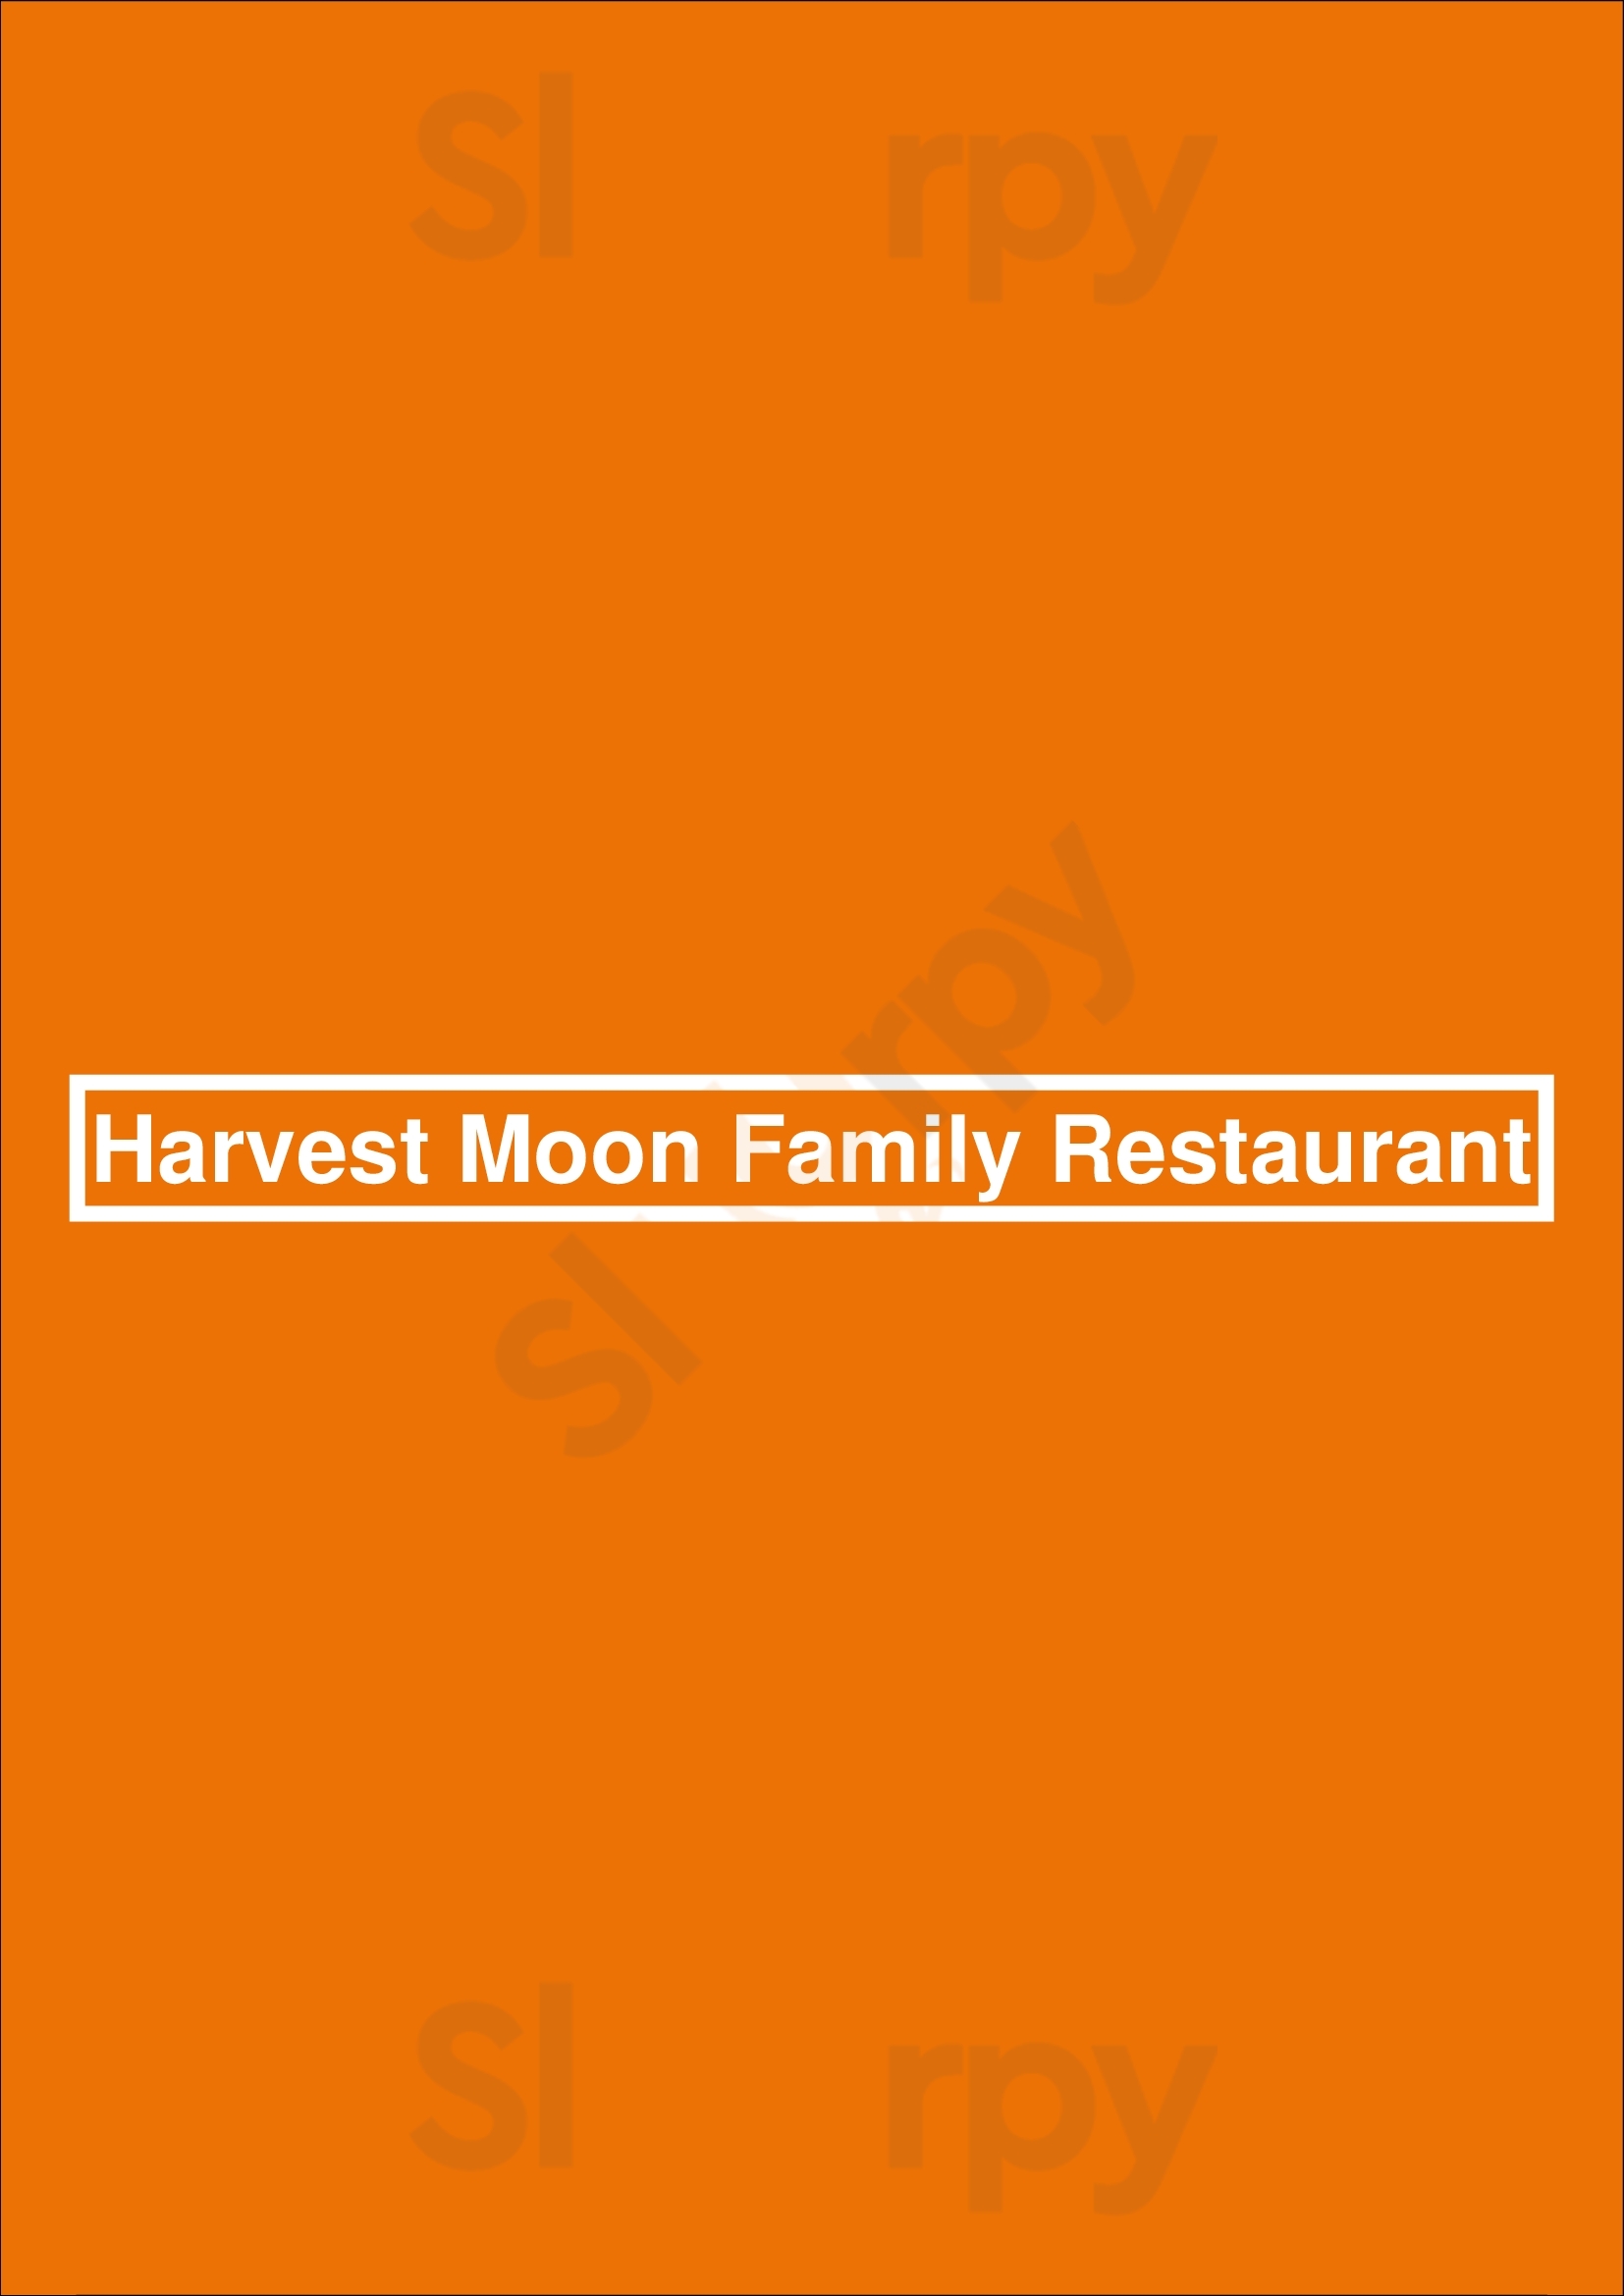 Harvest Moon Family Restaurant St. Jacobs Menu - 1